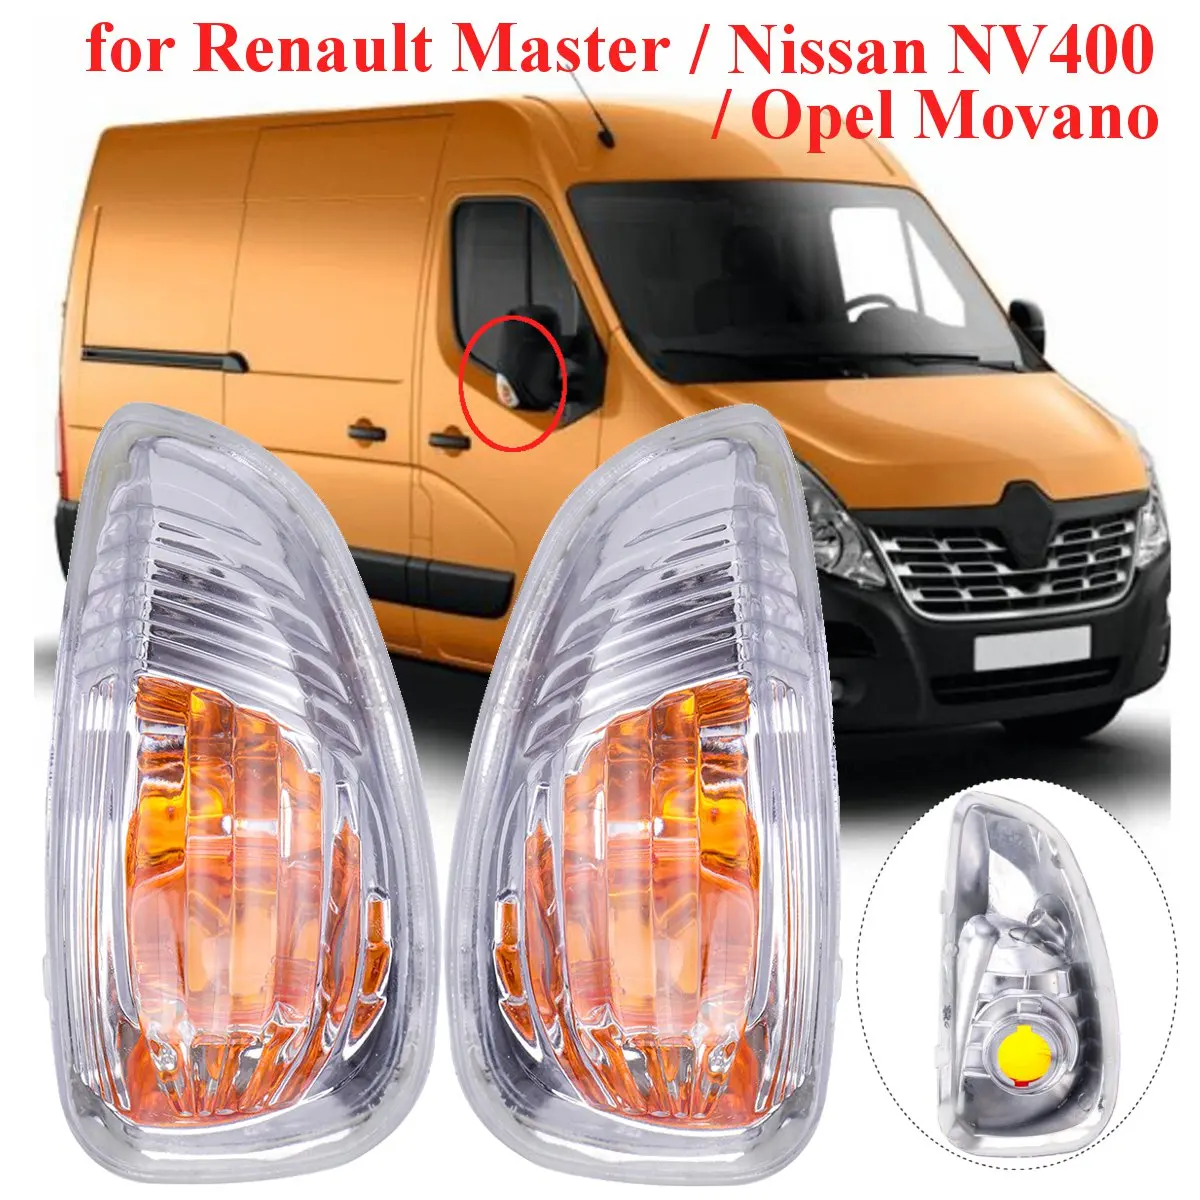 Влево/Вправо сторона боковое зеркало с подсветкой LED лампа для Renault Master Vauxhall Opel Movano Nissan NV400 2010 2011 2012 2013 - Испускаемый цвет: pair